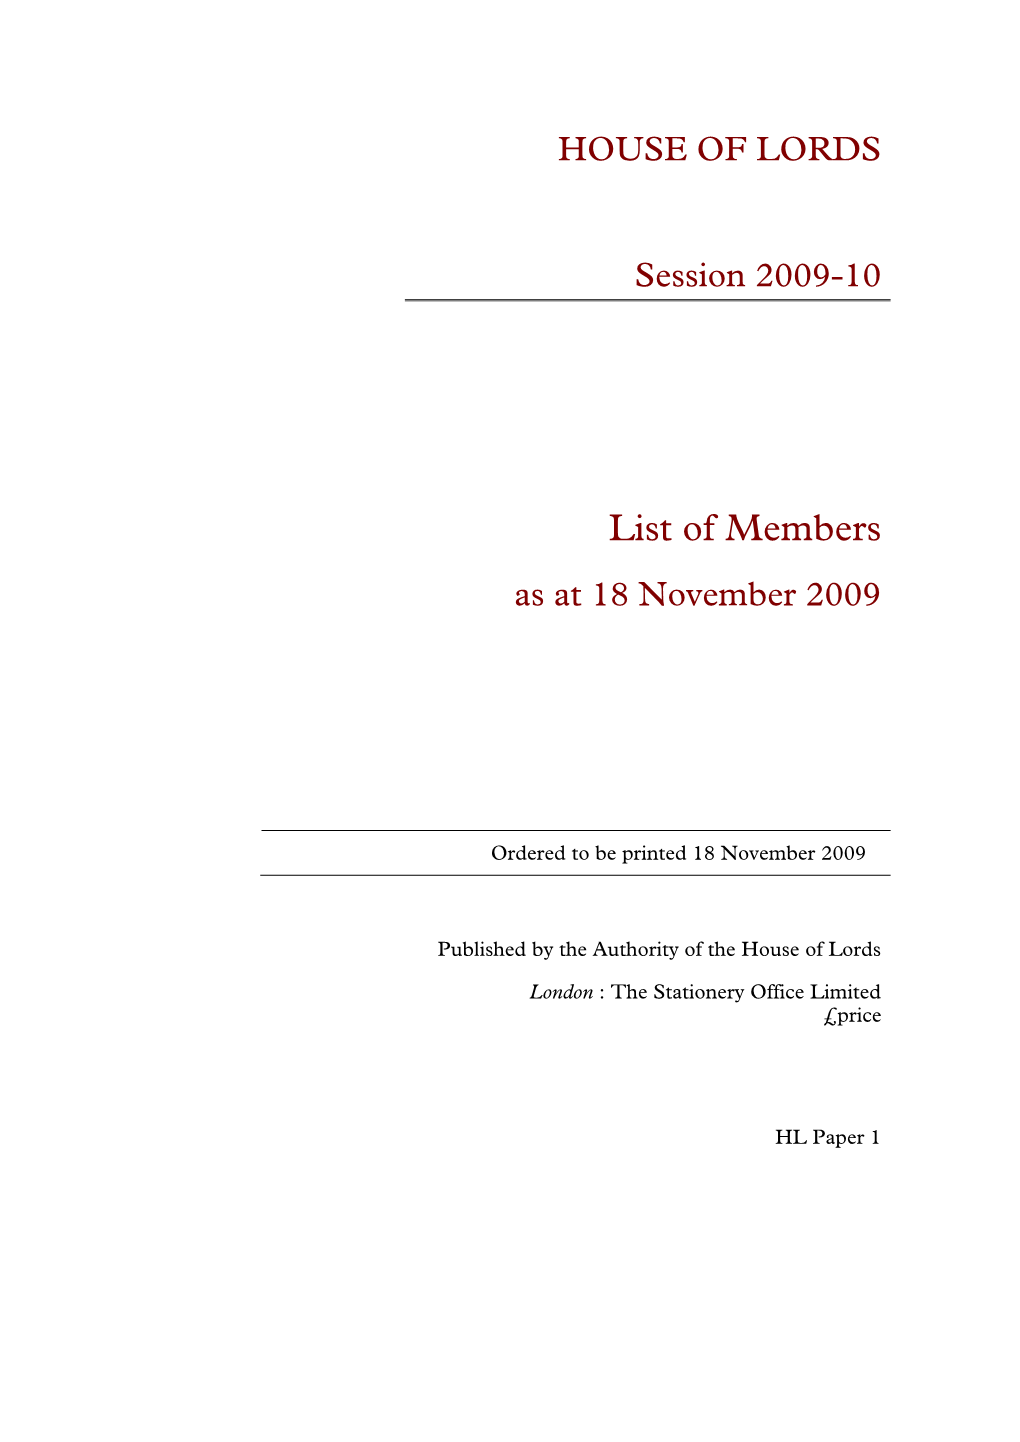 List of Members As at 18 November 2009